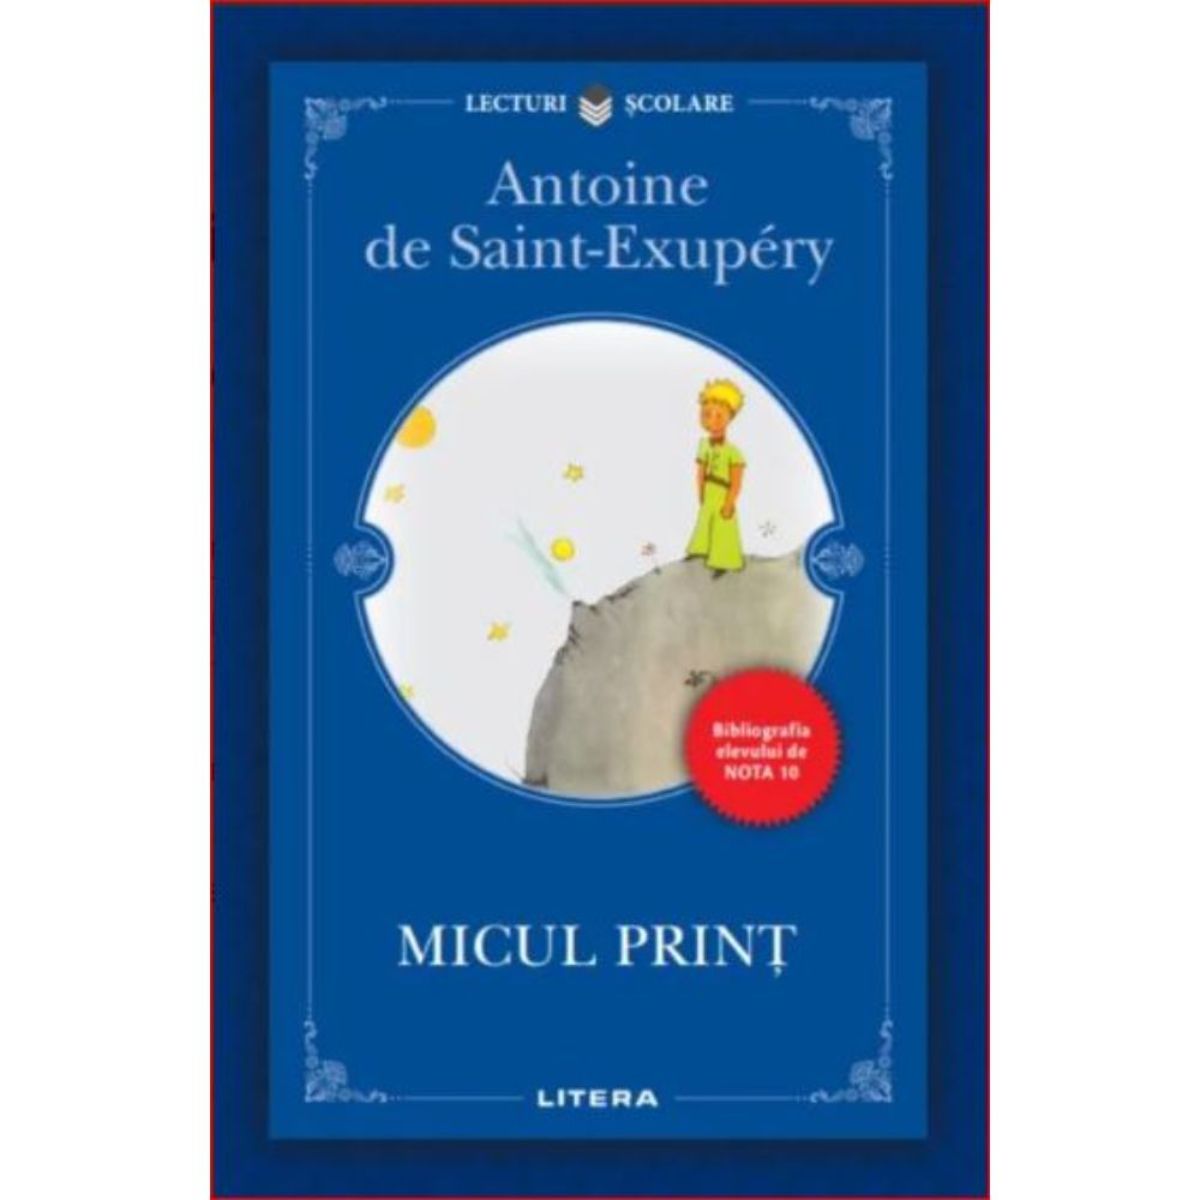 Micul Print, Antoine de Saint-Exupery, Editie noua